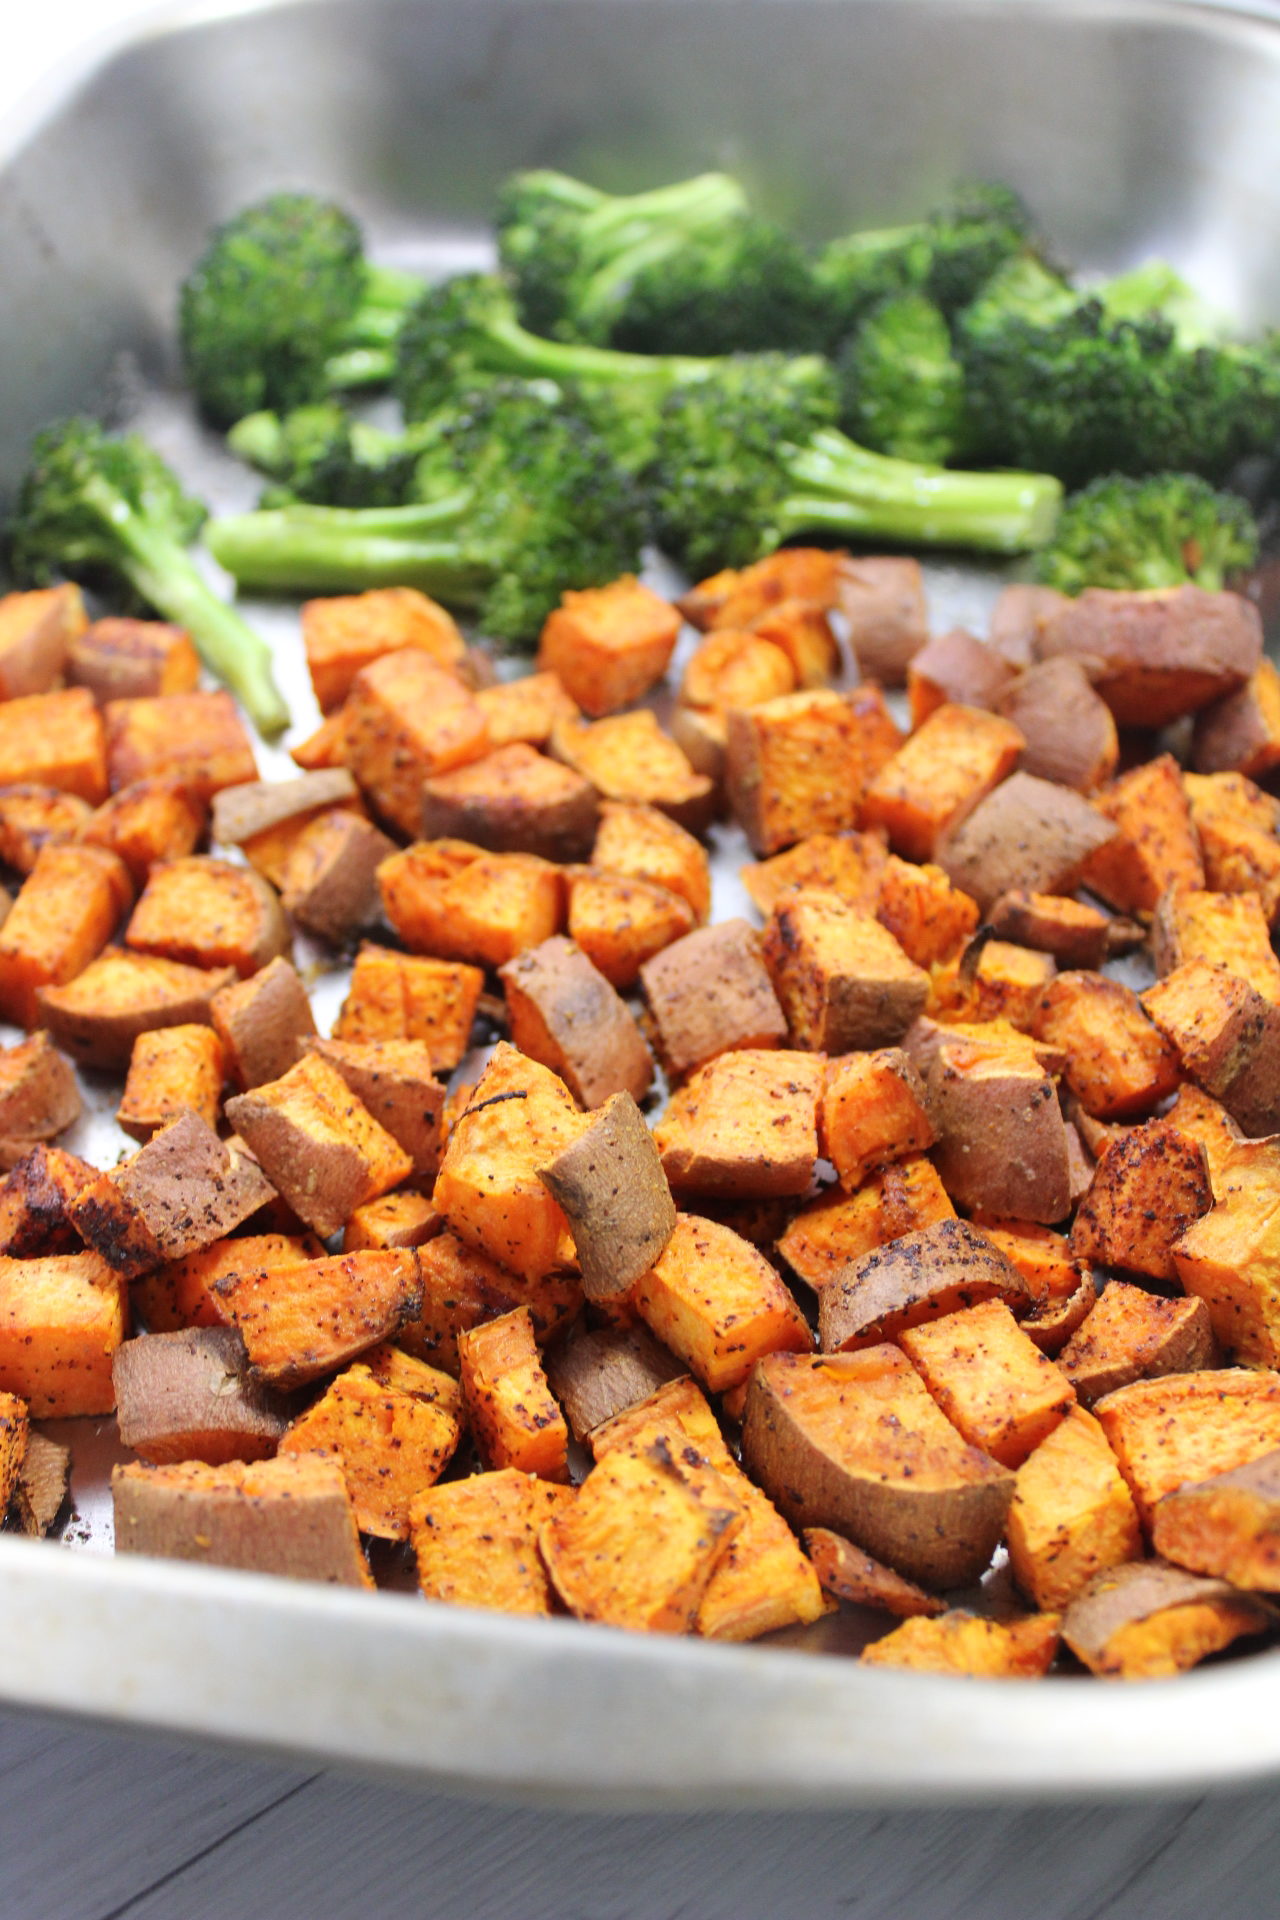 BBQ Pulled Pork & Sweet Potato Meal Prep – Emyogifit